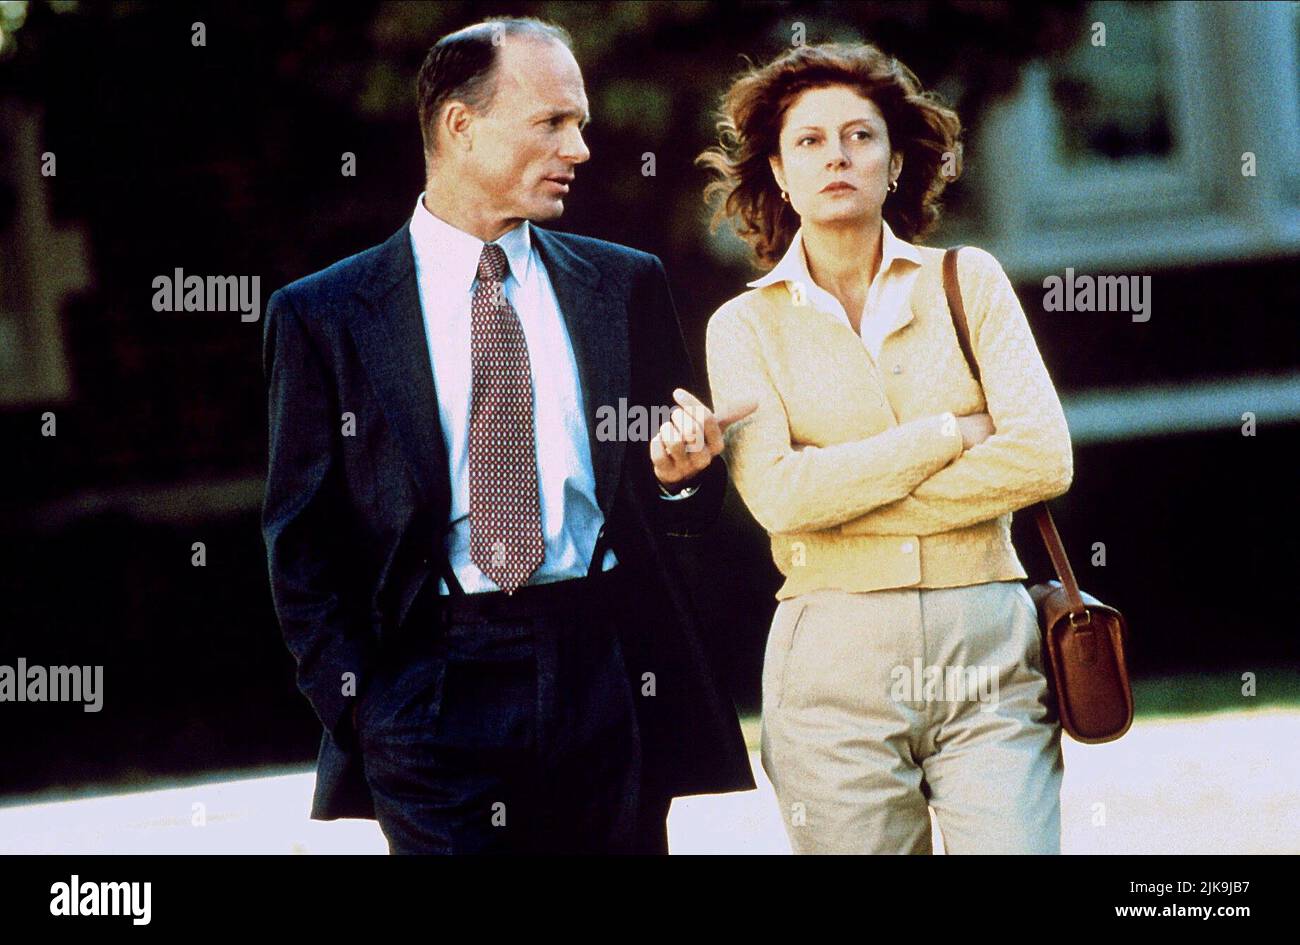 Ed Harris And Susan Sarandon Film Stepmom 1998 Characters Luke Harrison And Jackie Harrison